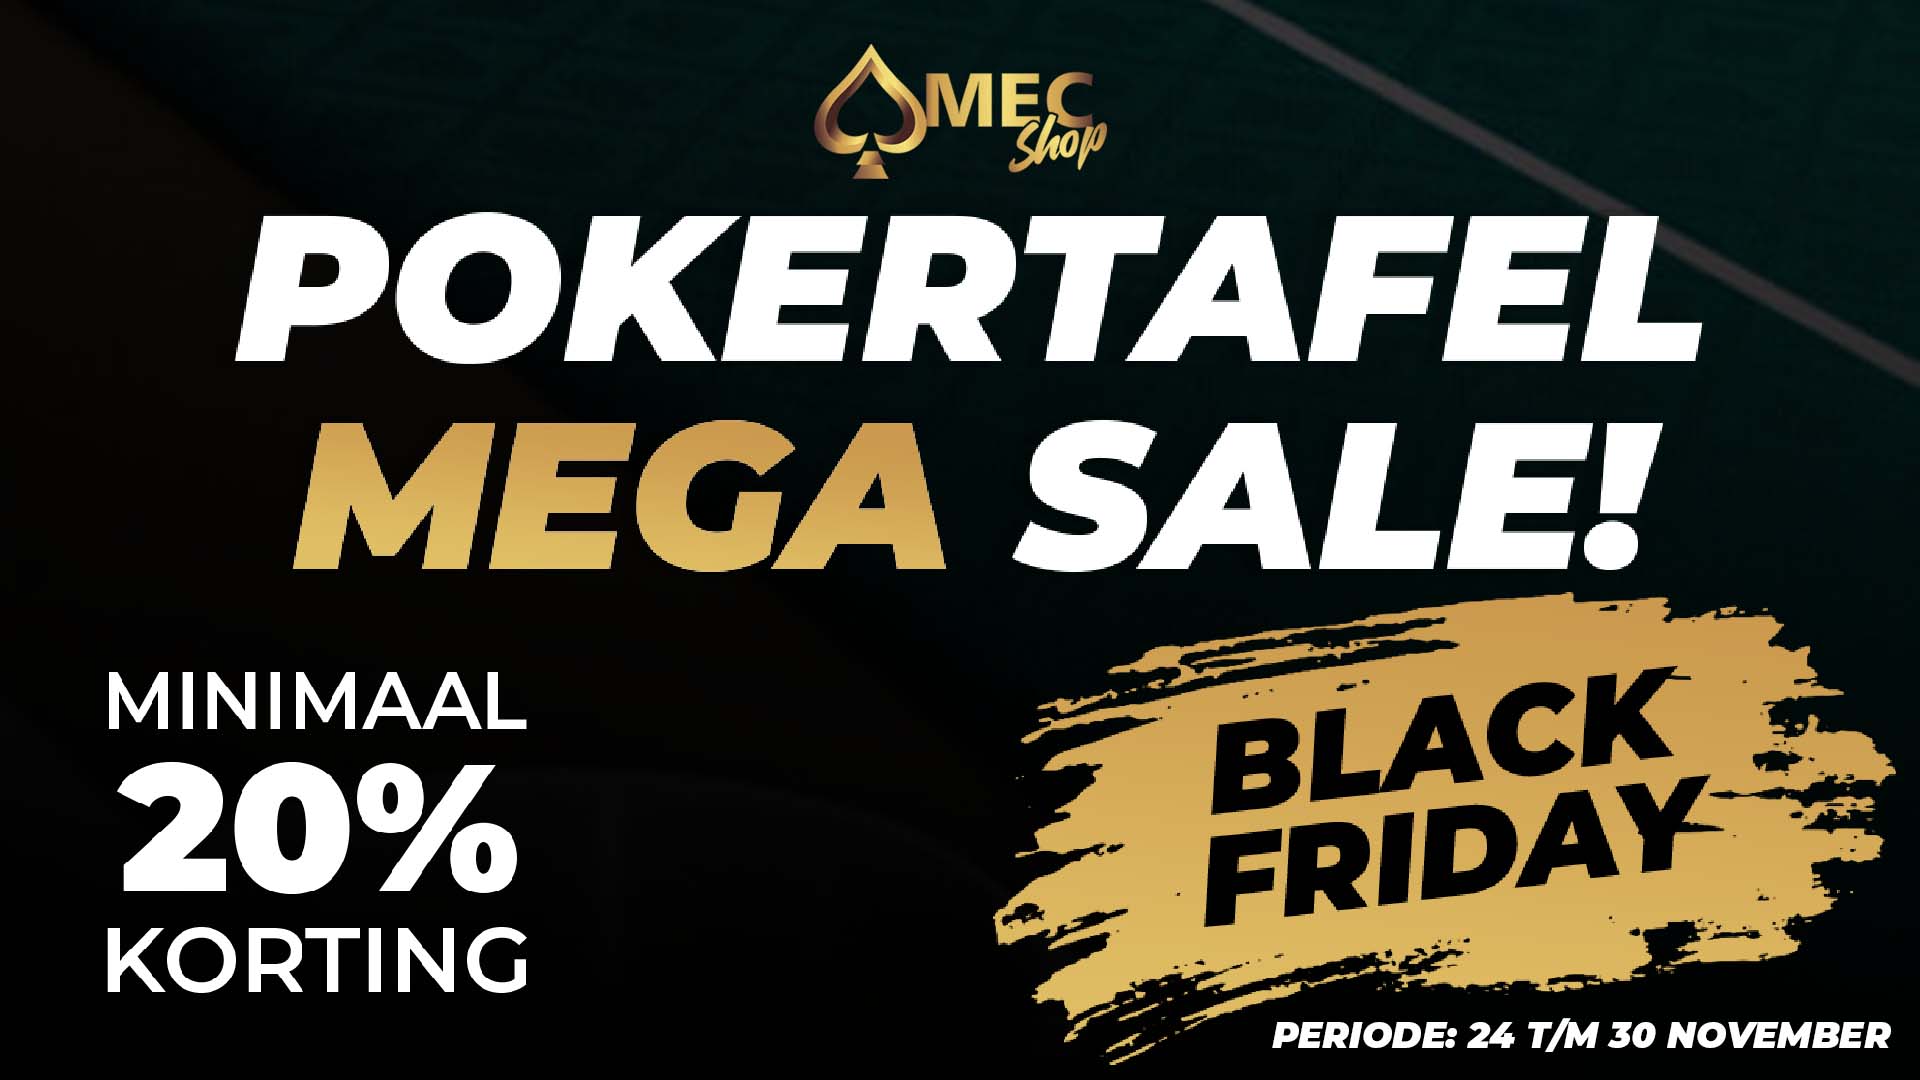 black friday poker table mega sale